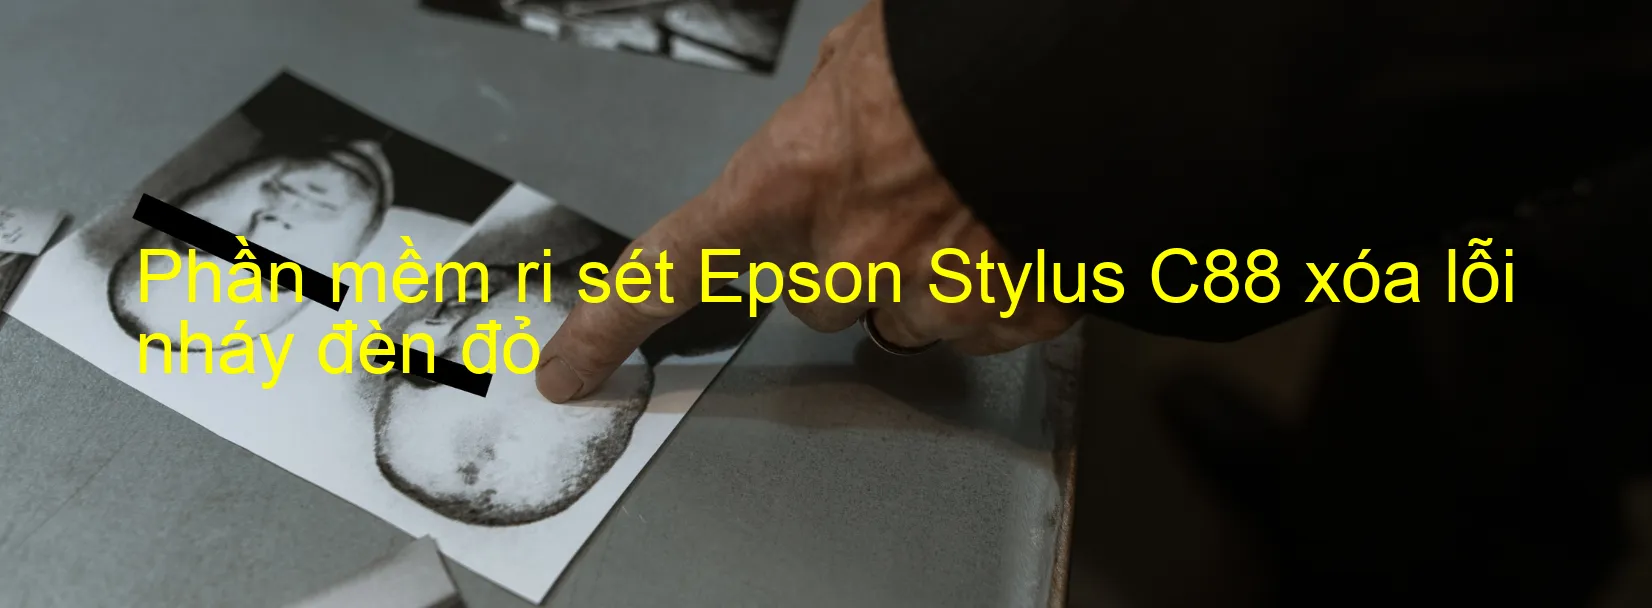 Phần mềm reset Epson Stylus C88 xóa lỗi nháy đèn đỏ